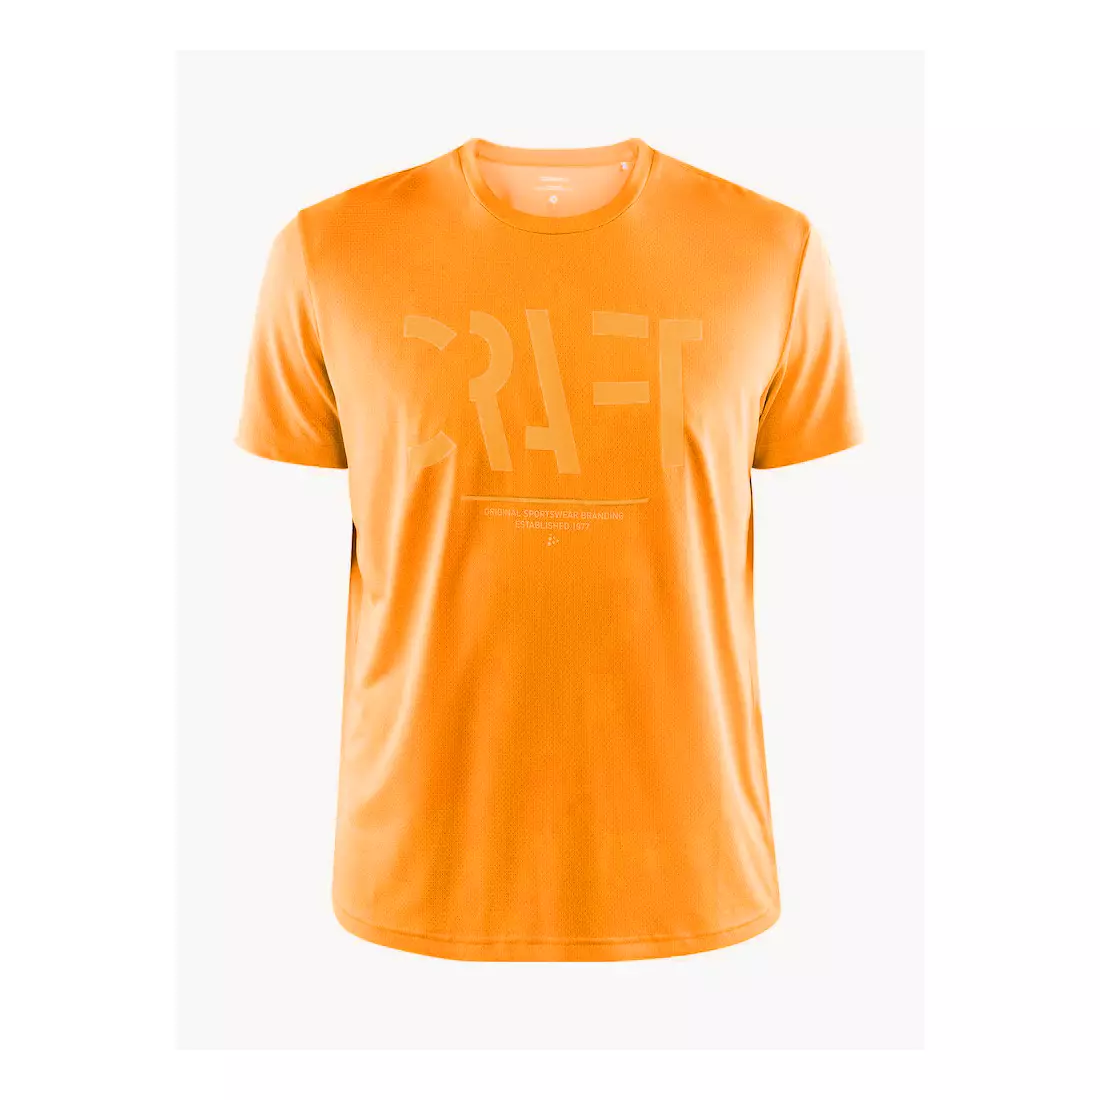 CRAFT EAZE MESH Herren sporthemd / laufshirt orange 1907018-557000